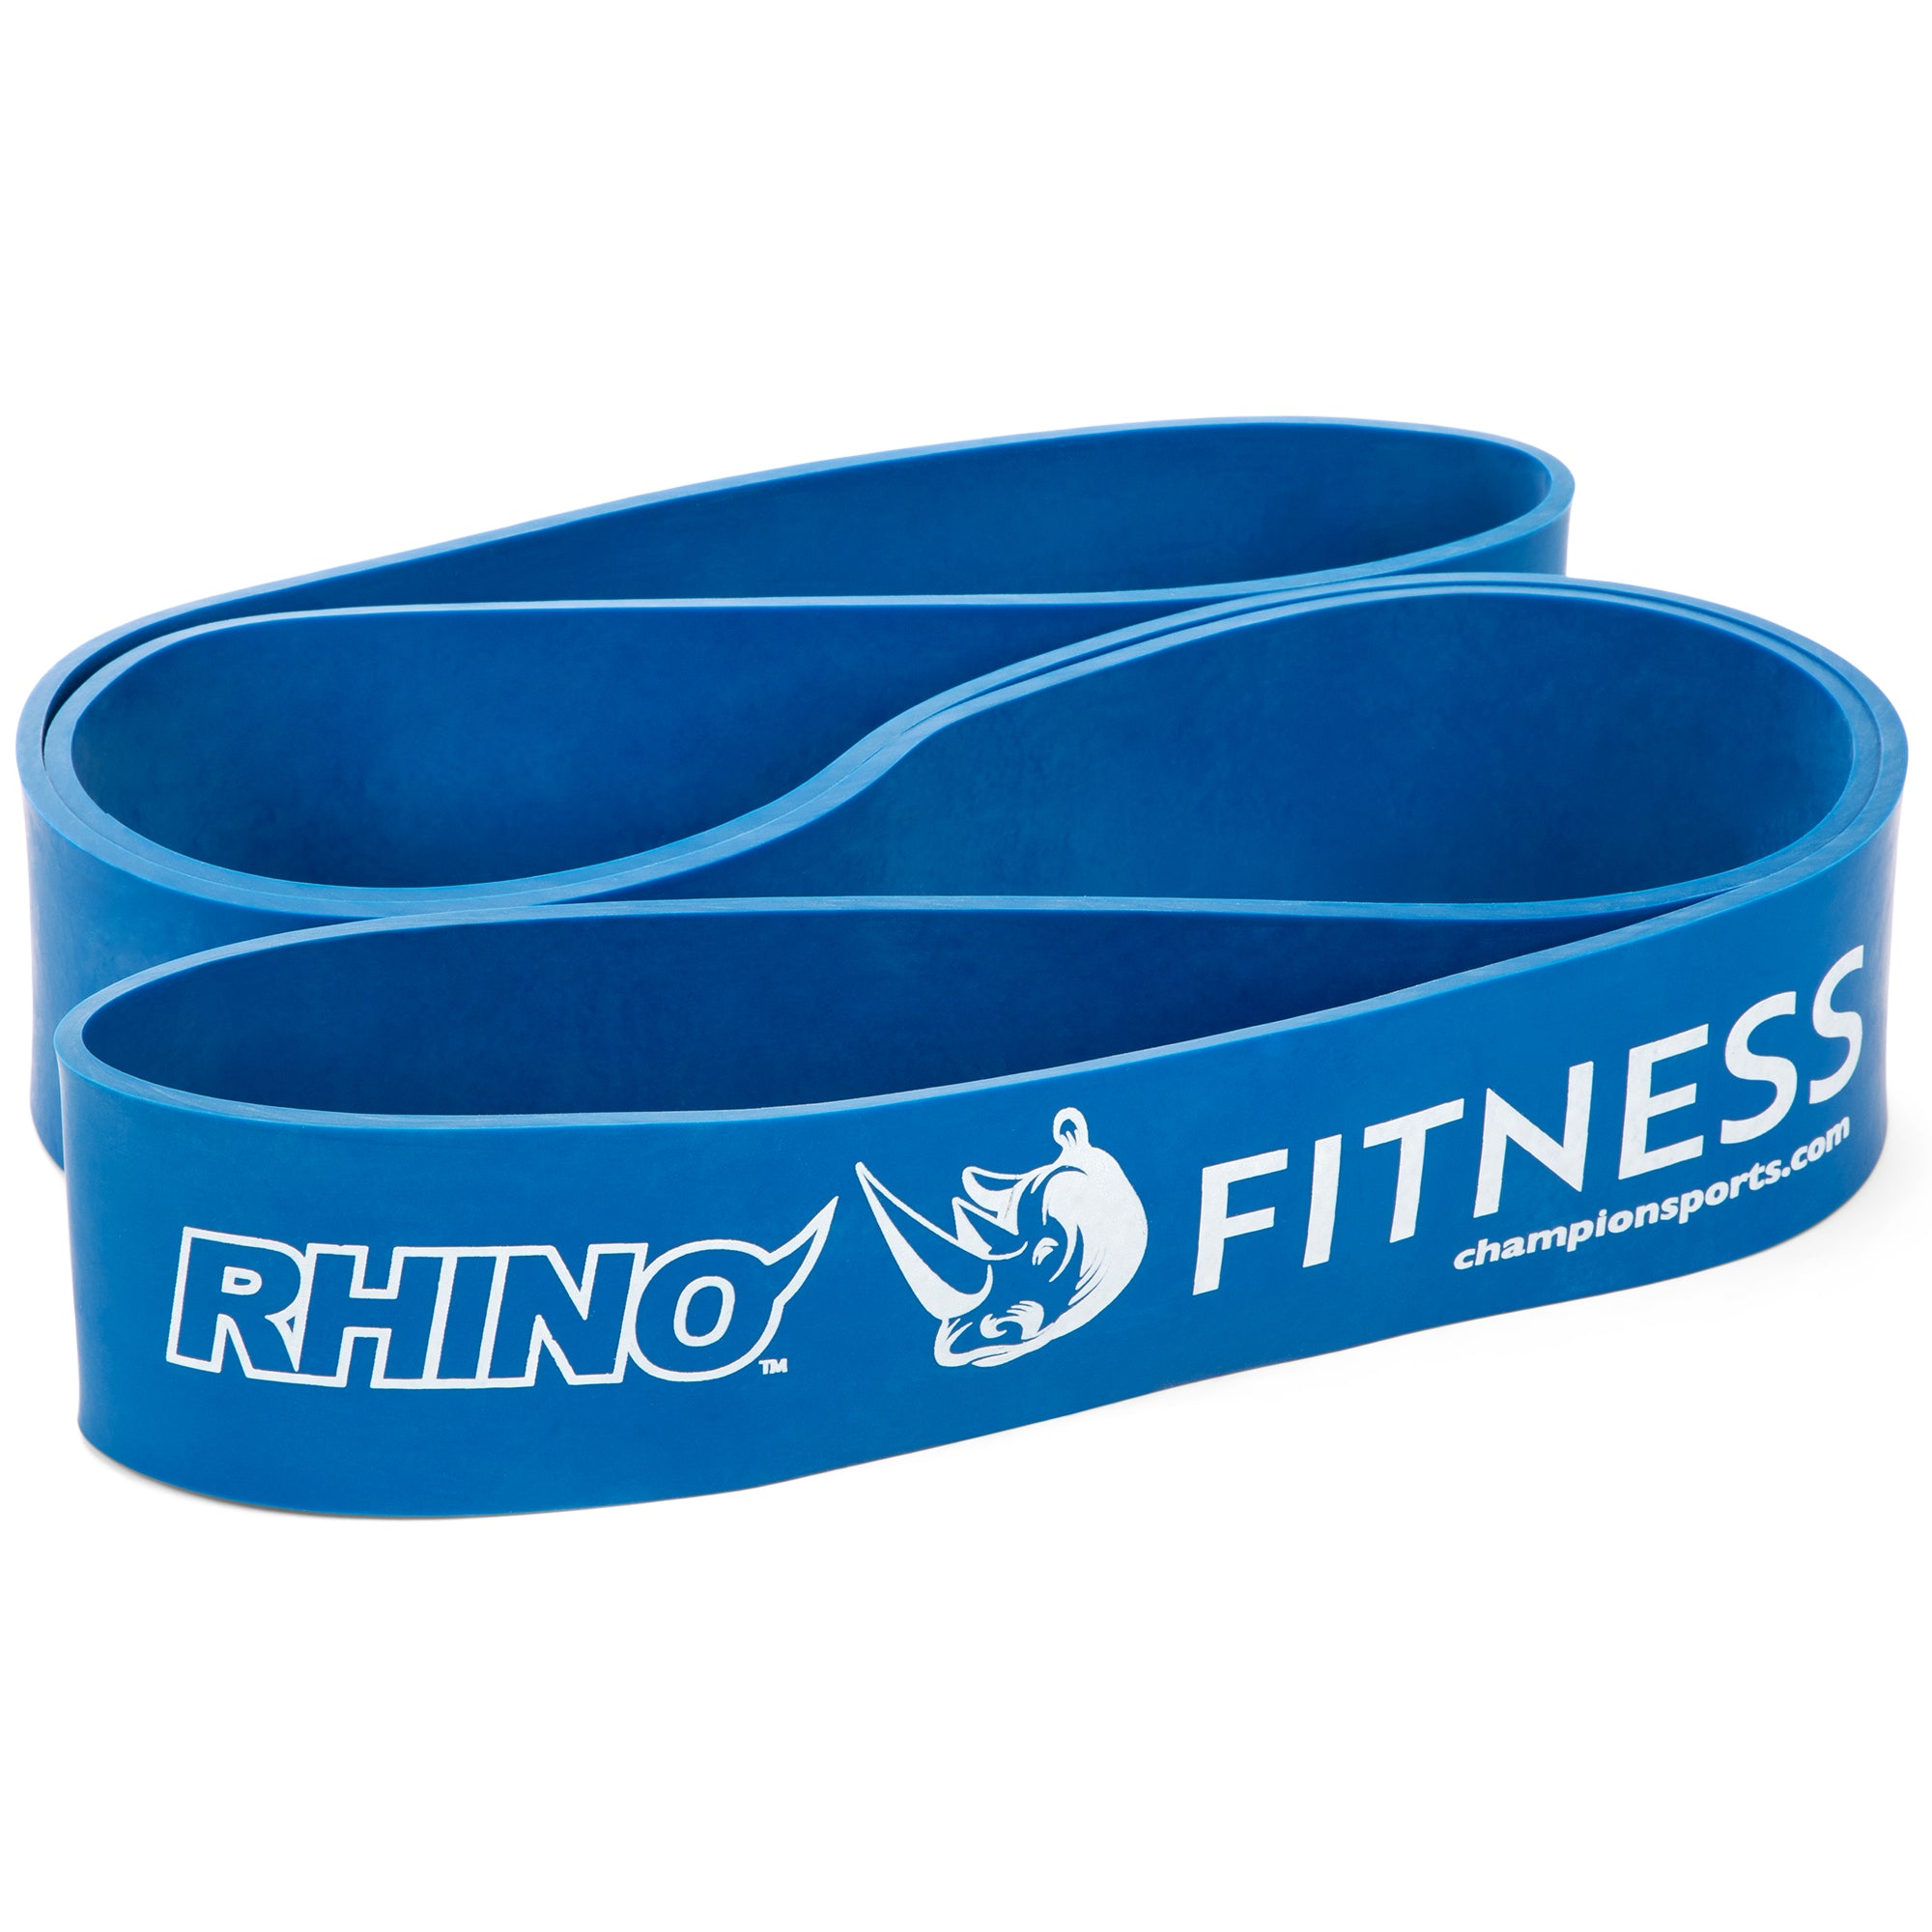 RHINO Fitness® Stretch Resistance-Training Band Series Extra-Heavy, 75-100 lbs, Blue RHINO Fitness fitness